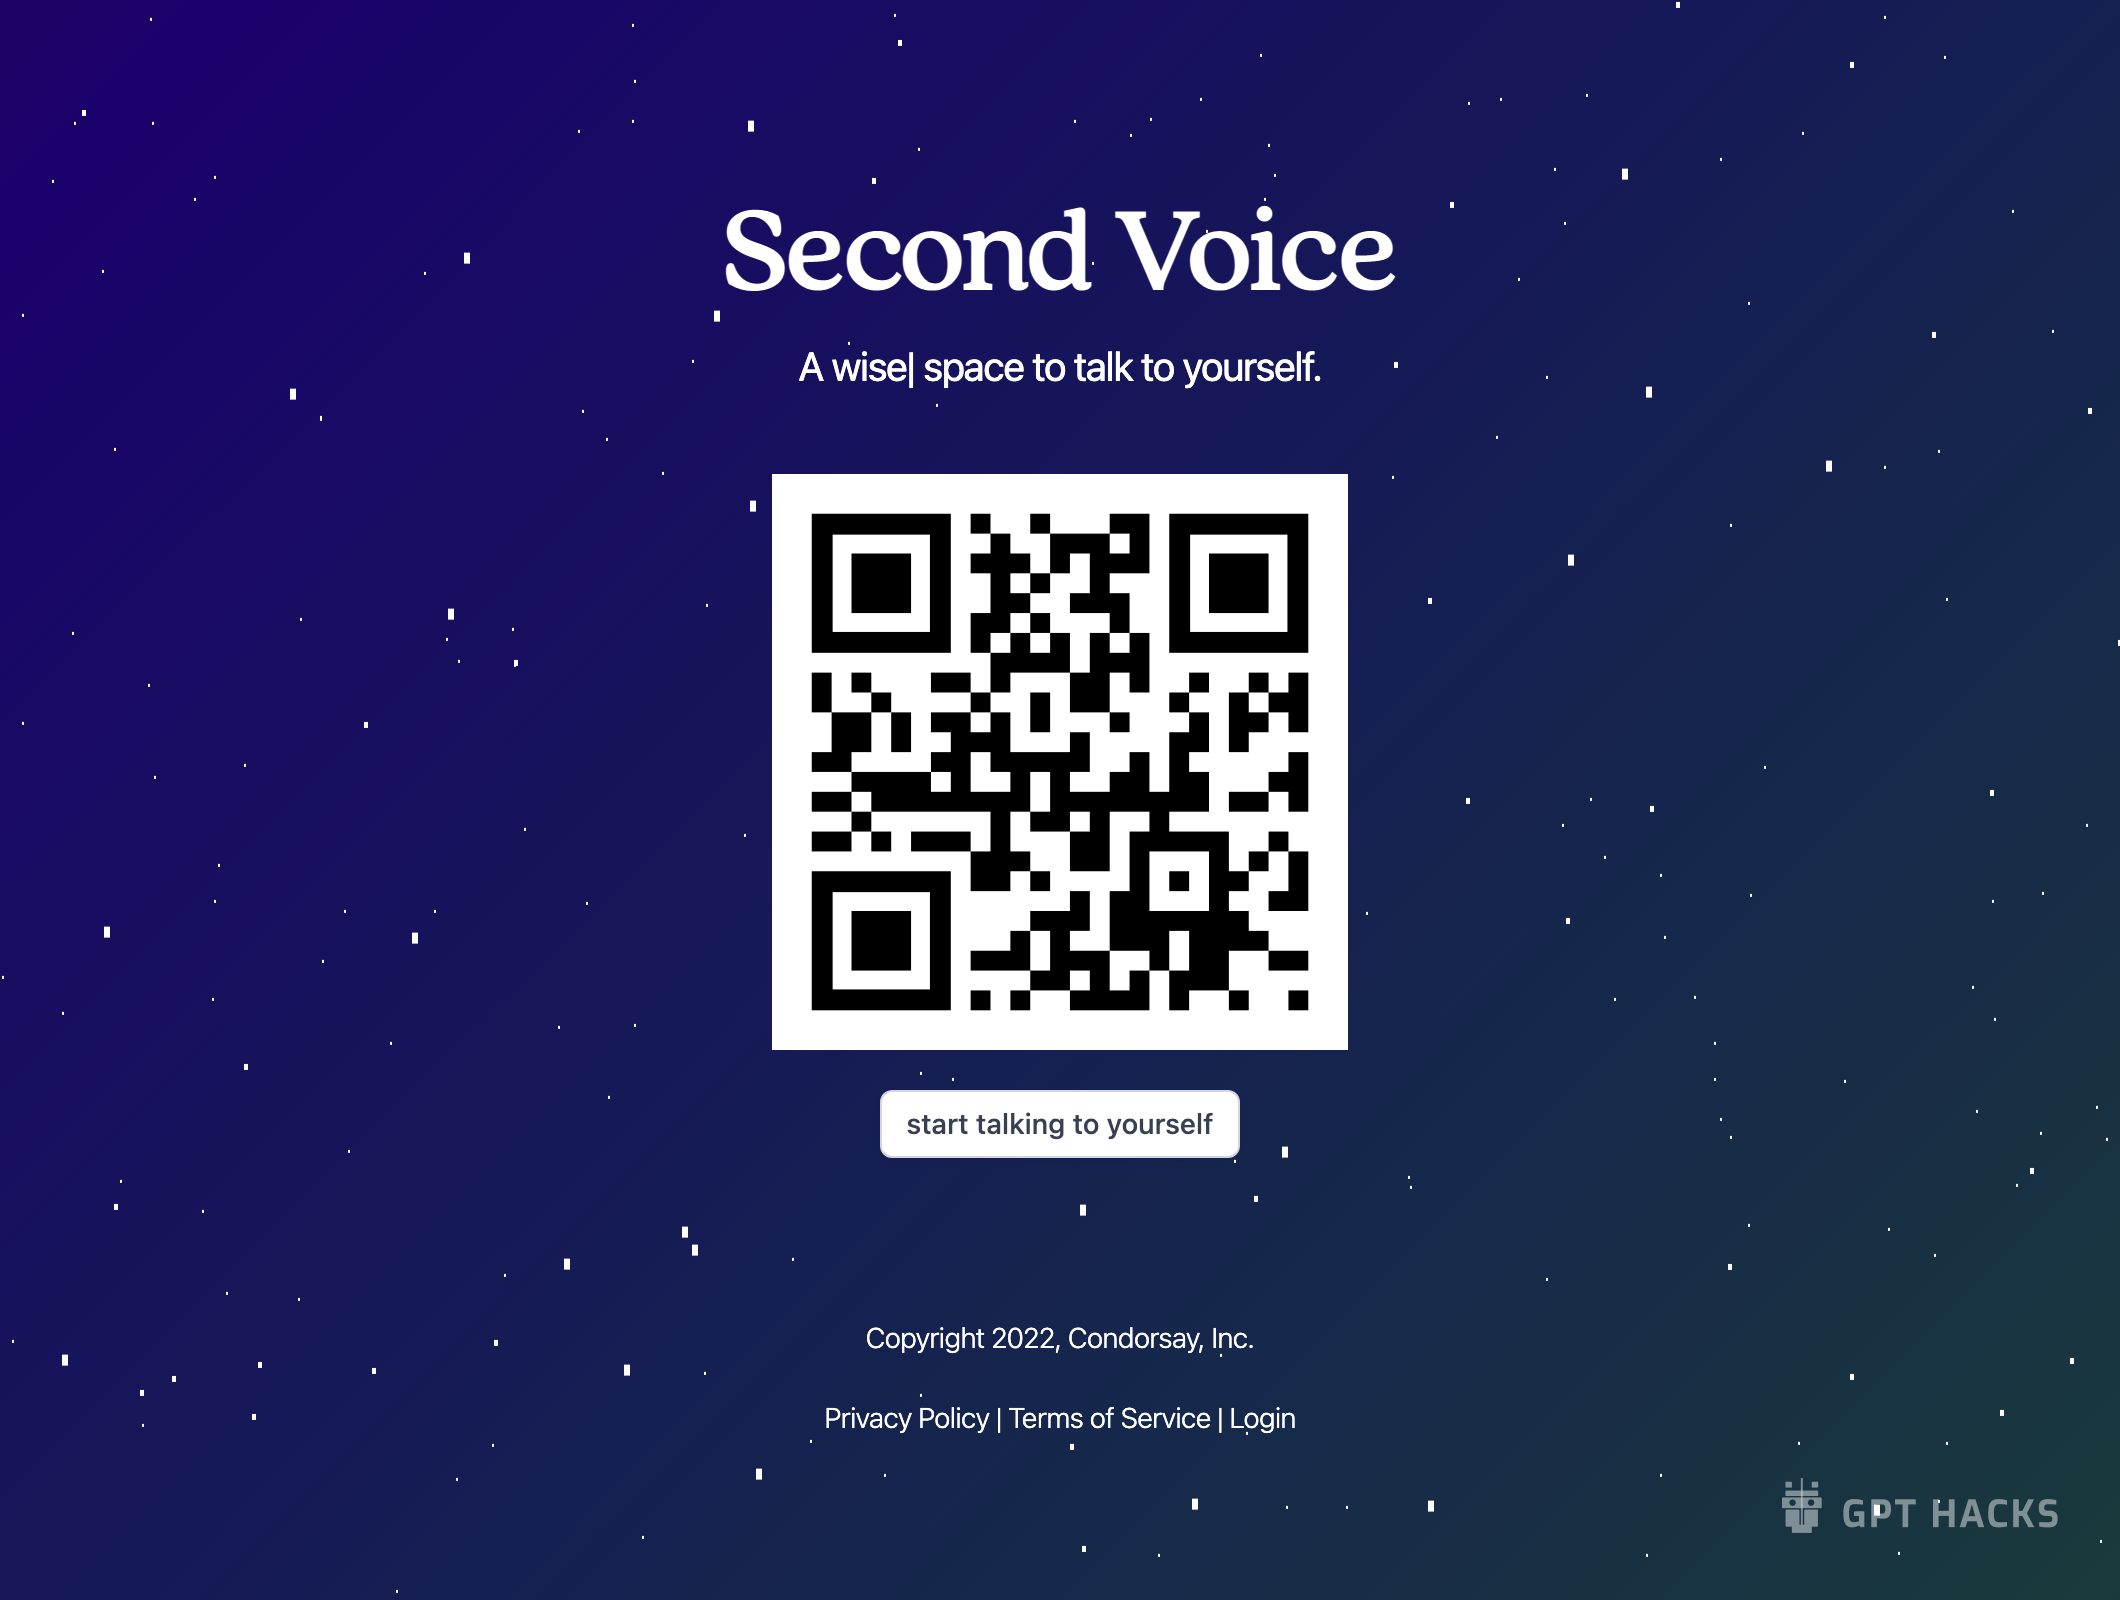 Second voice